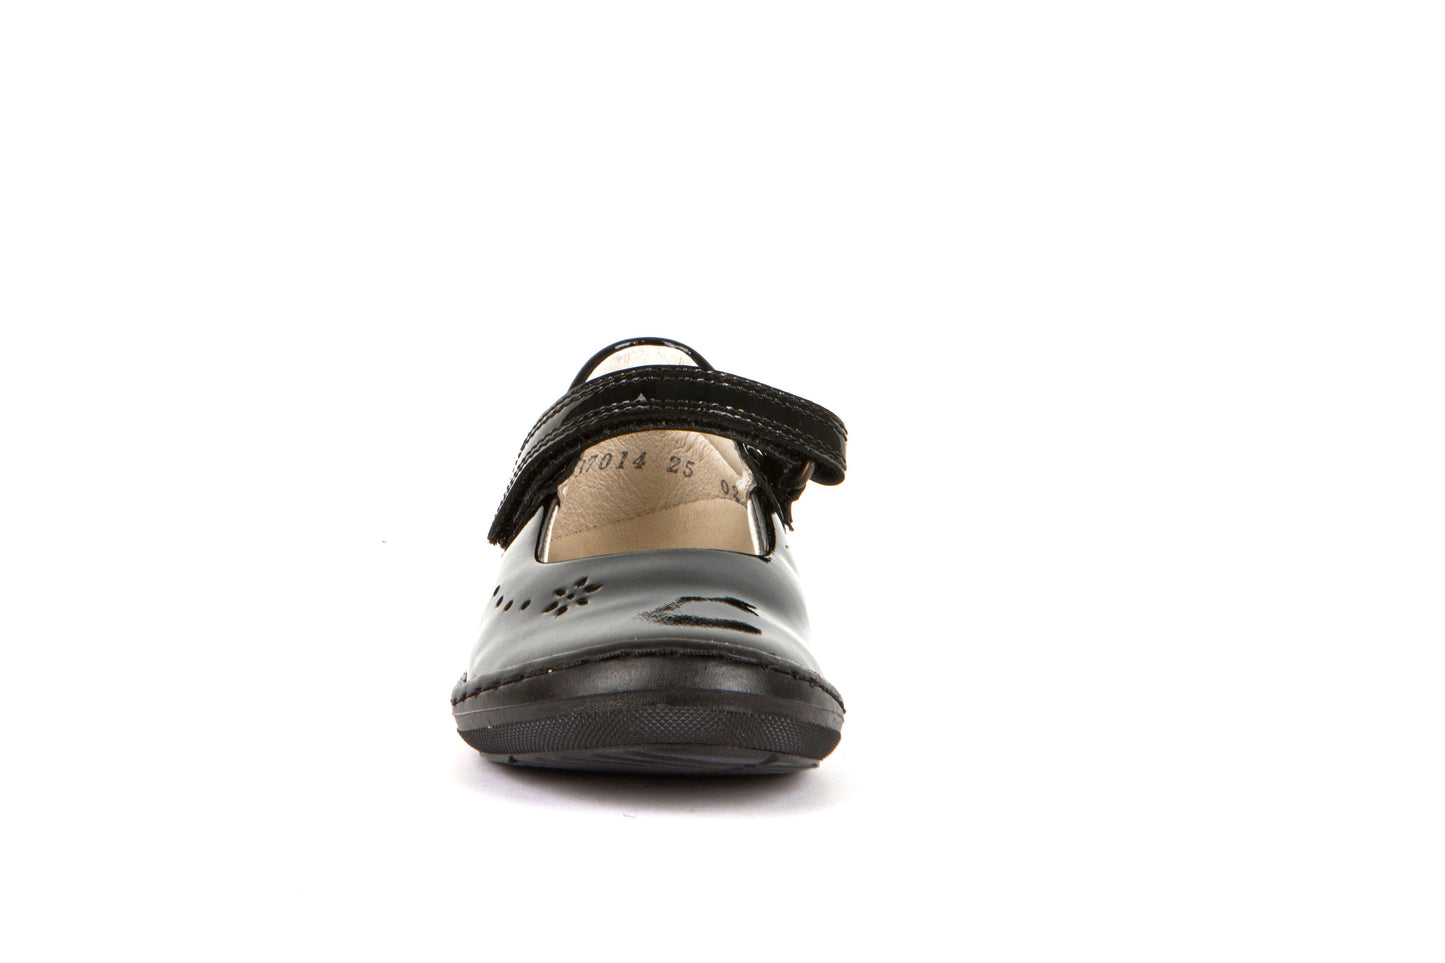 Mia Black Patent Leather Girl's School Shoe